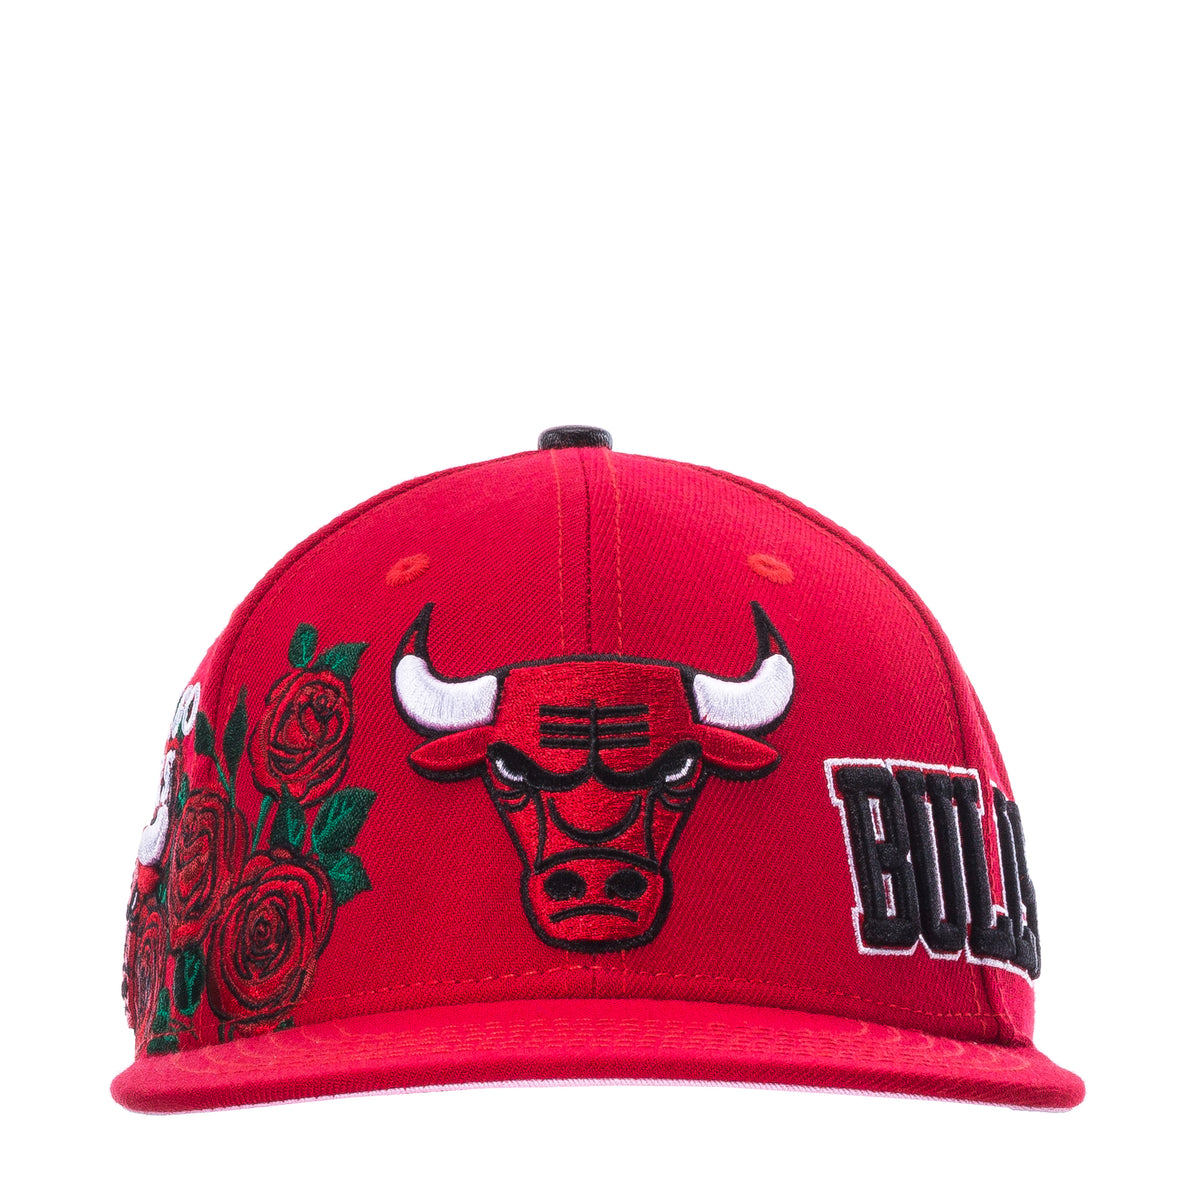 chicago bulls youth hats